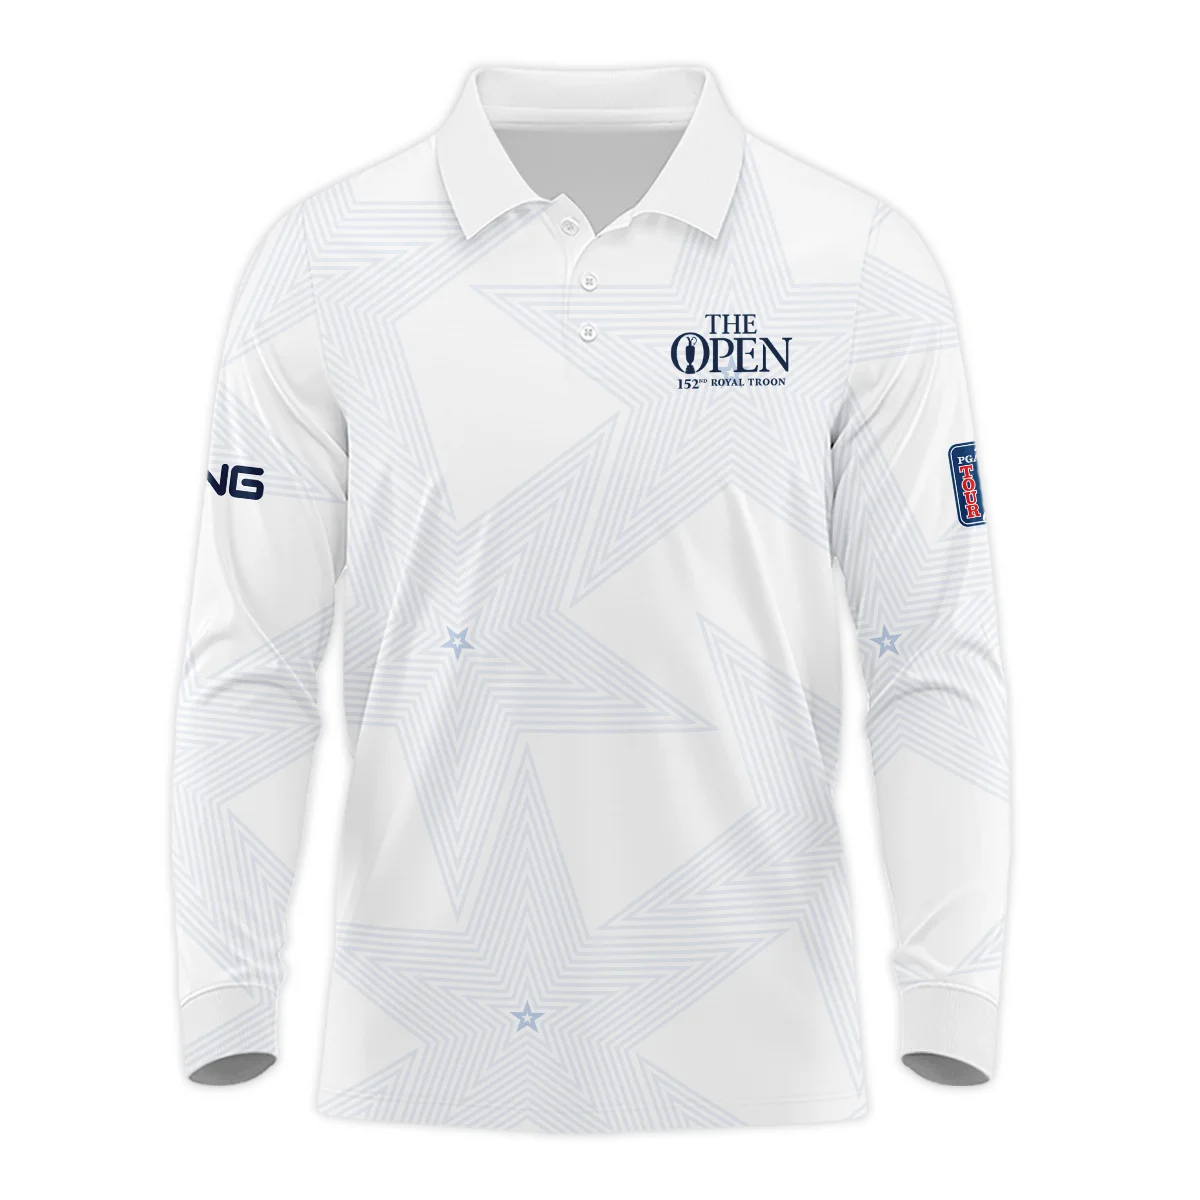 The 152nd Open Championship Golf Sport Ping Sleeveless Jacket Sports Star Sripe White Navy Sleeveless Jacket